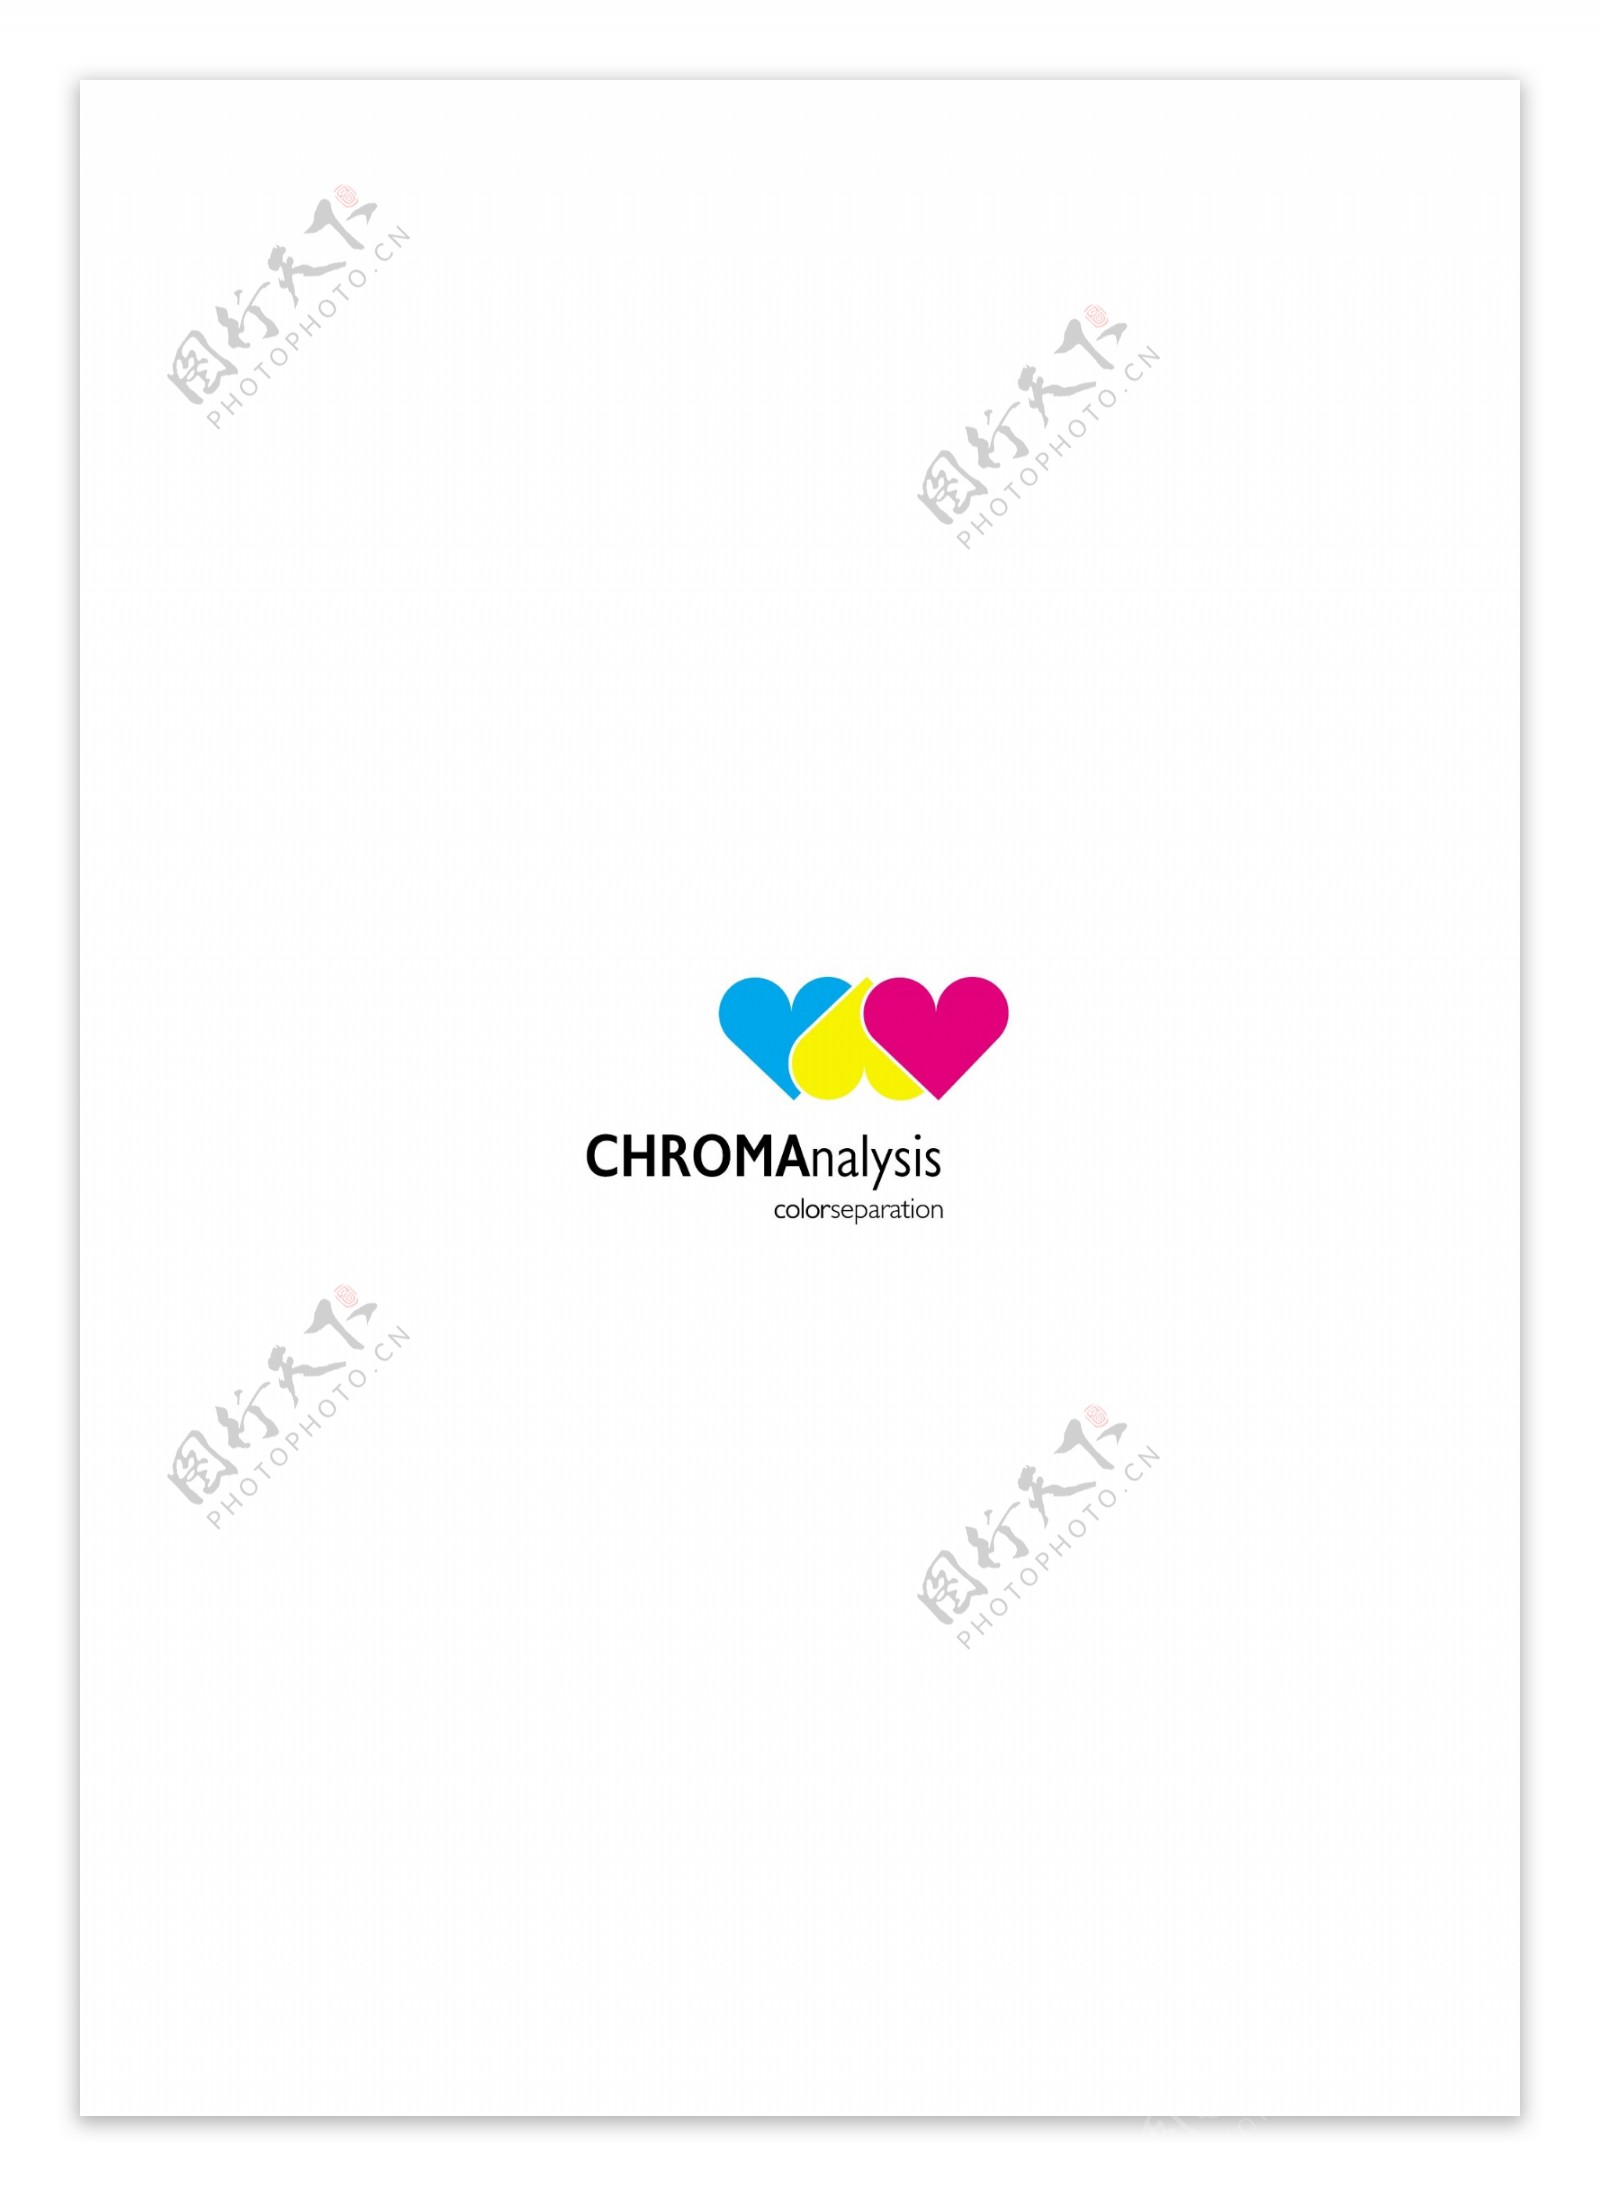 Chromanalysislogo设计欣赏Chromanalysis服务公司标志下载标志设计欣赏